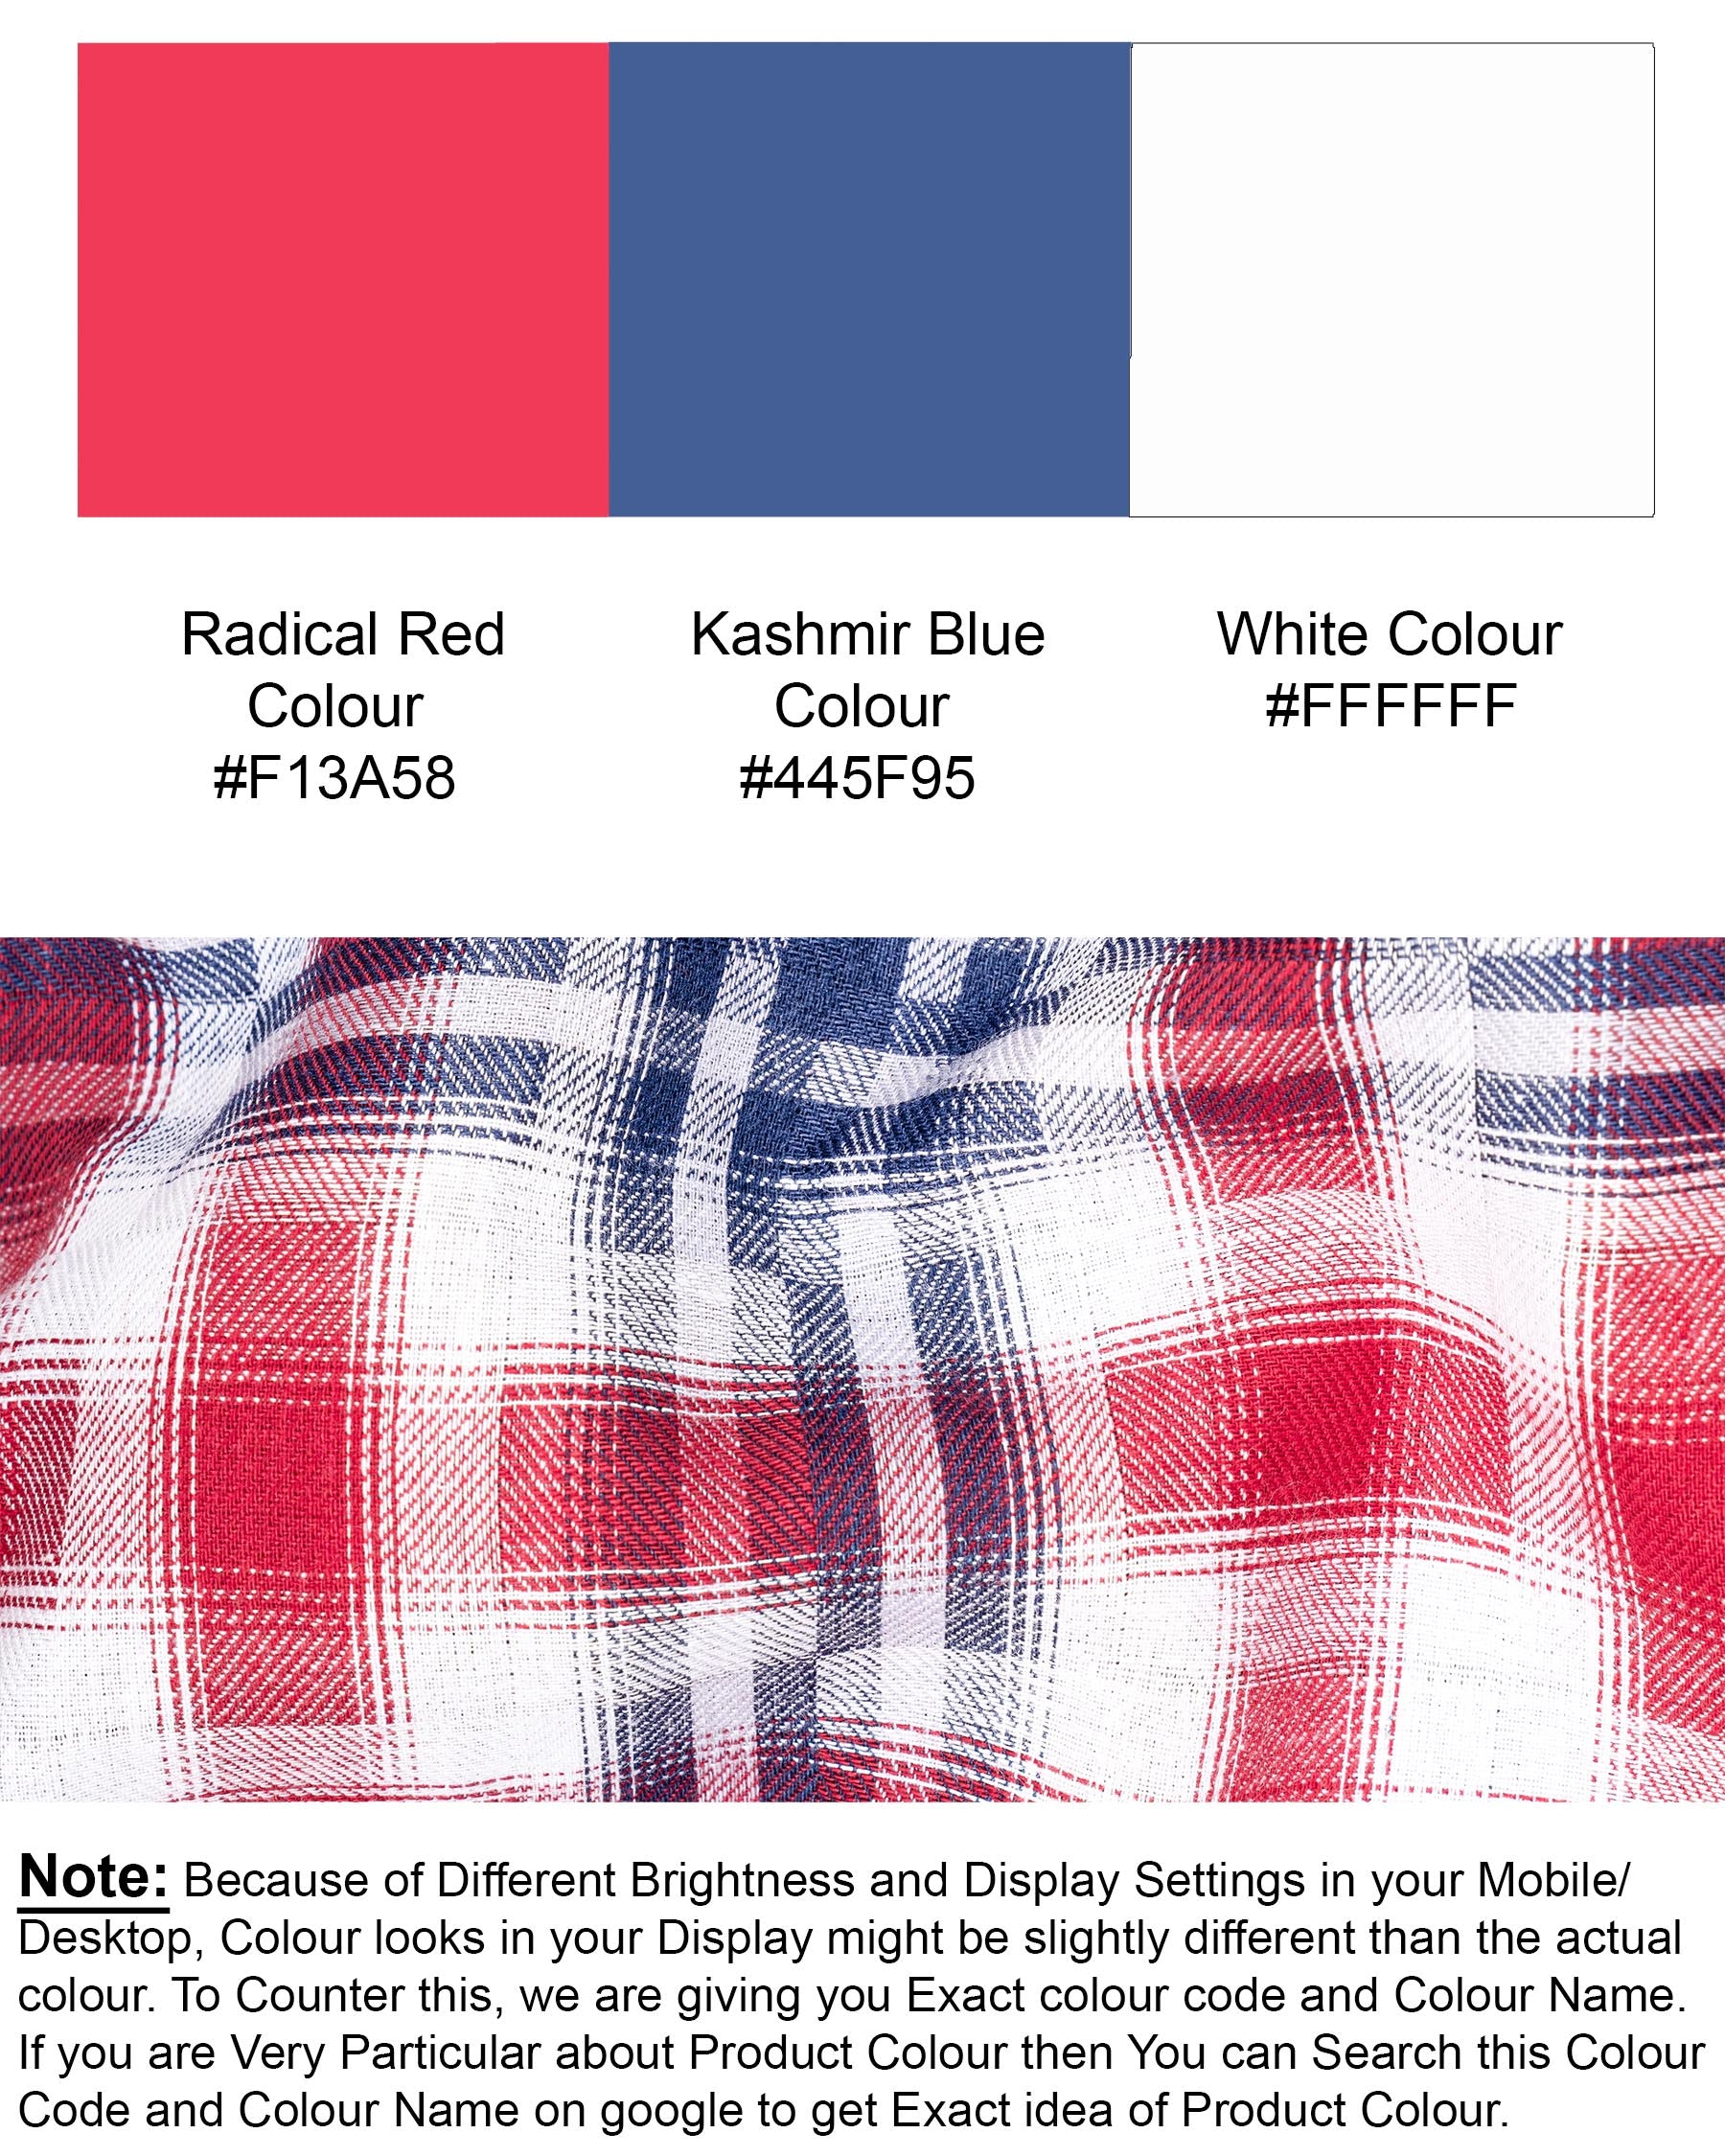 Radical Red and Kashmir Blue Plaid Twill Textured Textured Premium Cotton Shirt 6587-BD-38,6587-BD-38,6587-BD-39,6587-BD-39,6587-BD-40,6587-BD-40,6587-BD-42,6587-BD-42,6587-BD-44,6587-BD-44,6587-BD-46,6587-BD-46,6587-BD-48,6587-BD-48,6587-BD-50,6587-BD-50,6587-BD-52,6587-BD-52